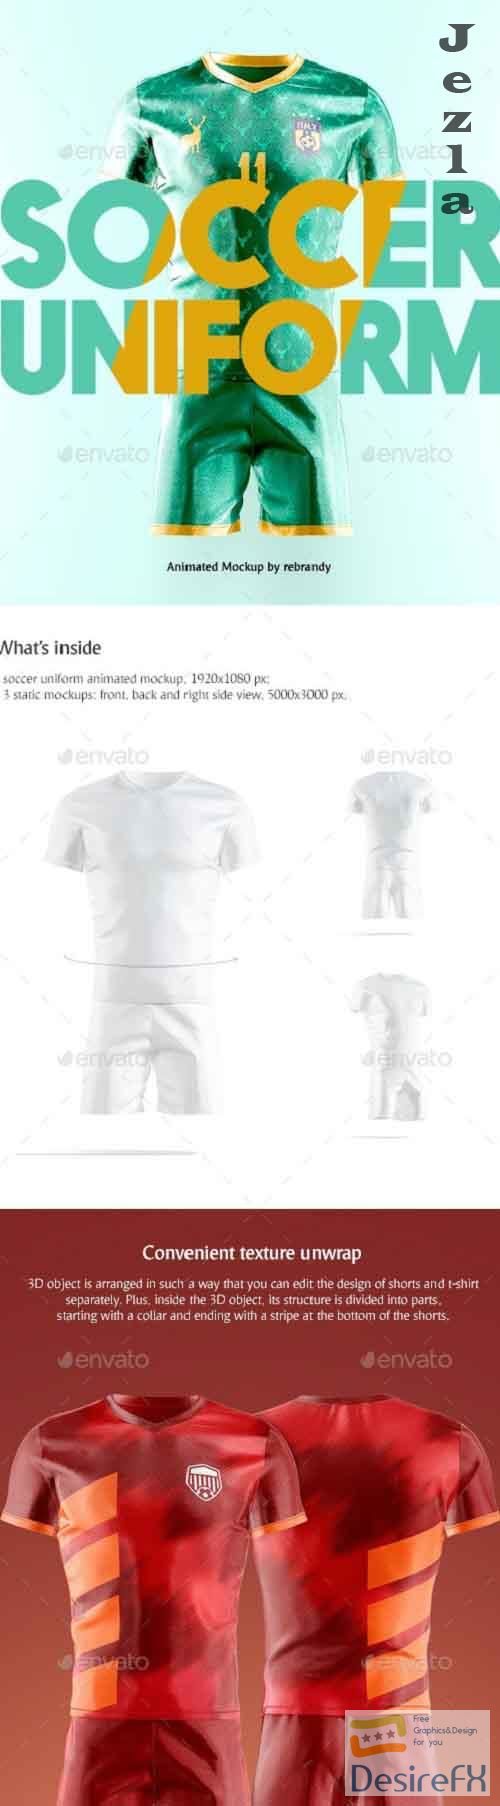 Soccer Uniform Animated Mockup - 26561446